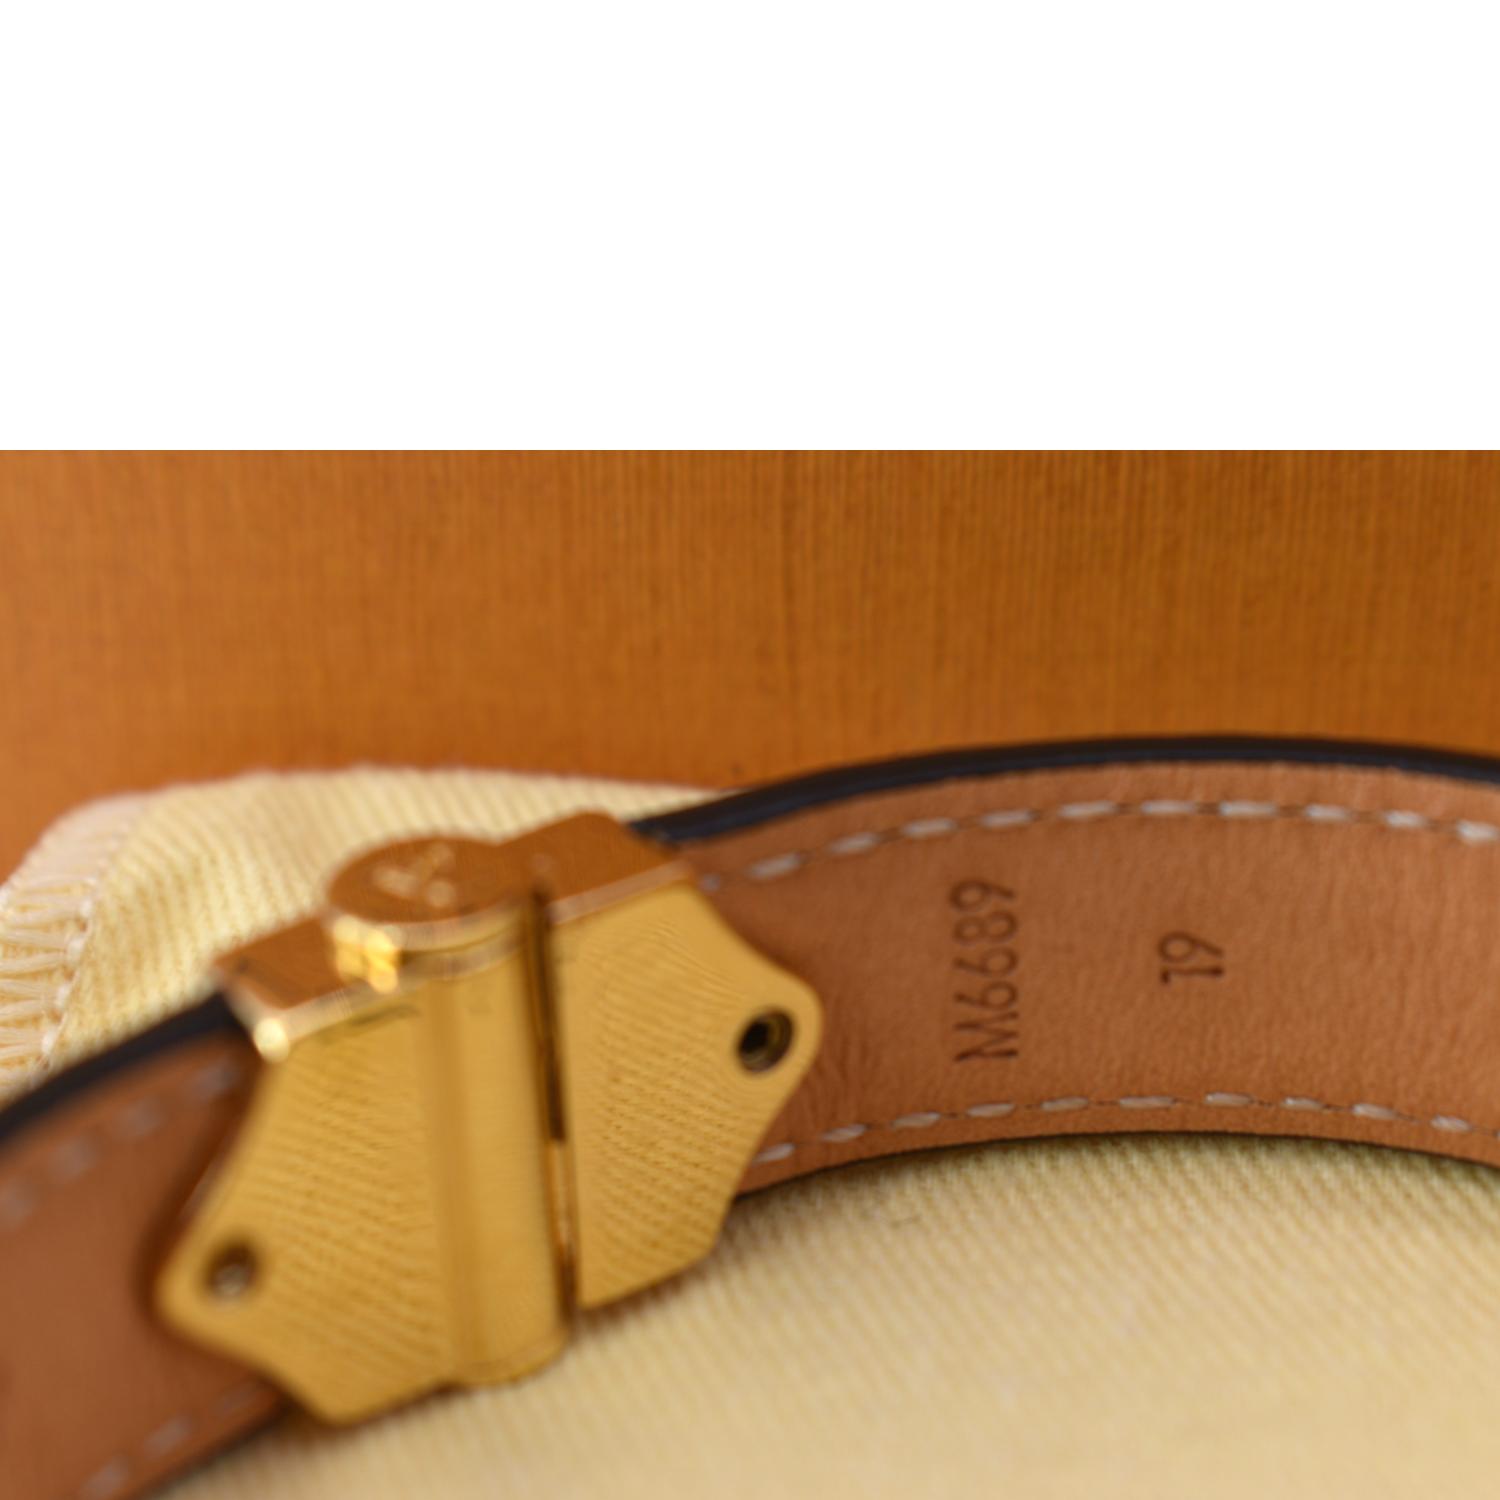 Louis Vuitton Nano Monogram Bracelet Size 19 7.5 Inches